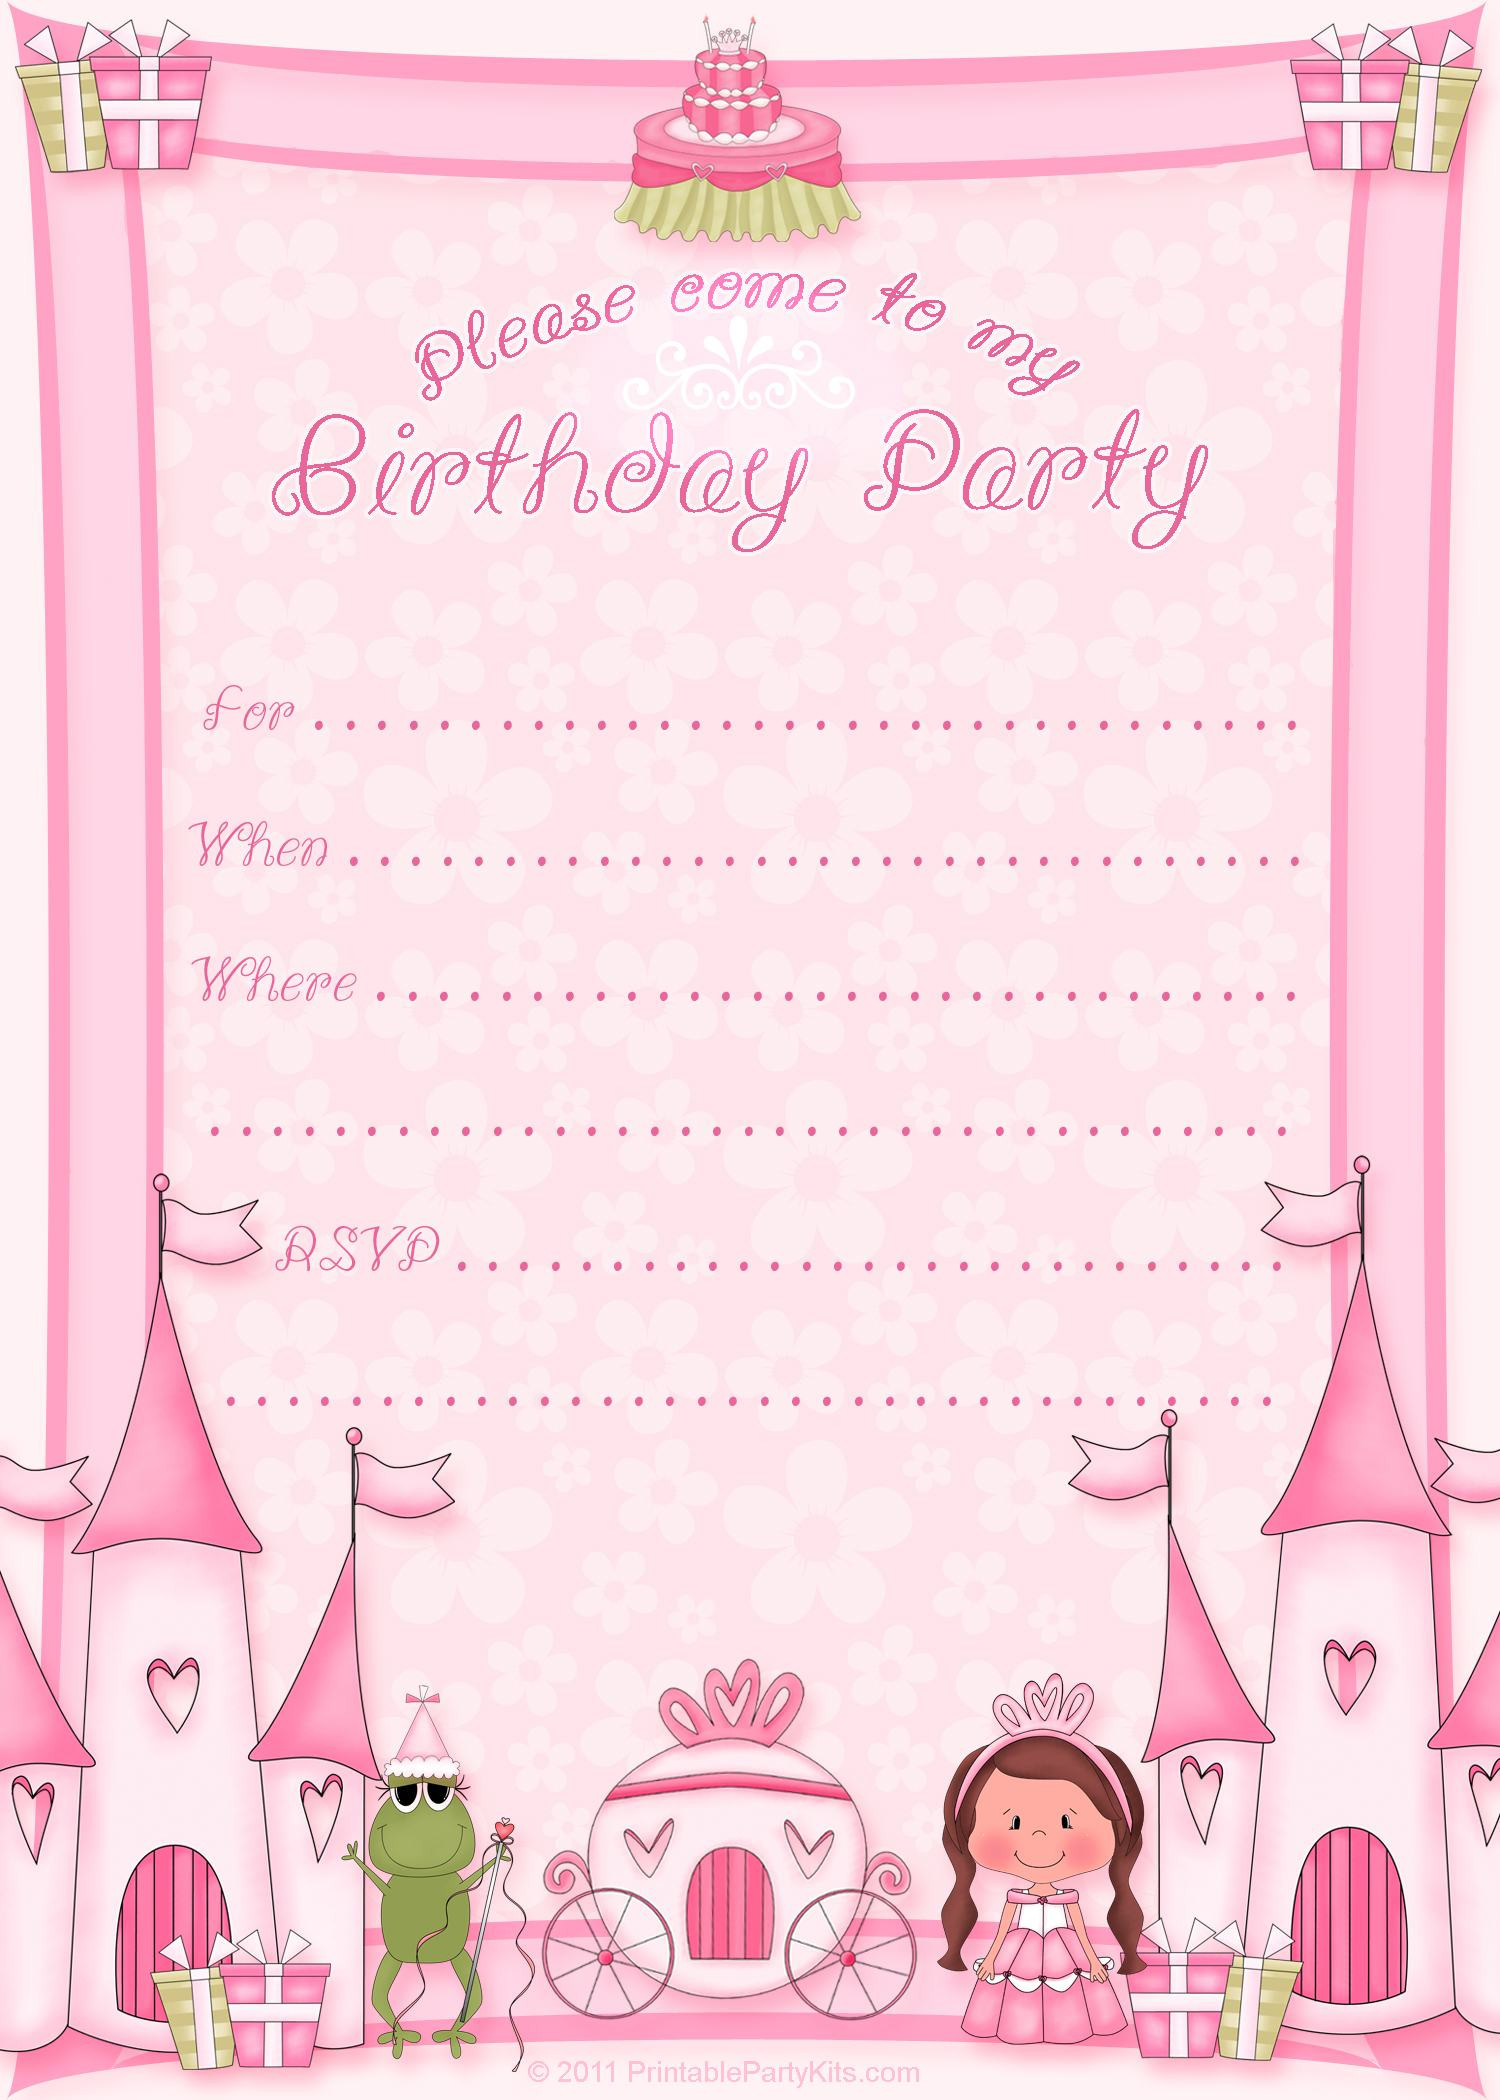 Best ideas about Birthday Invitation Card Maker
. Save or Pin Birthday Invitation Card Birthday Invitation Card Maker Now.